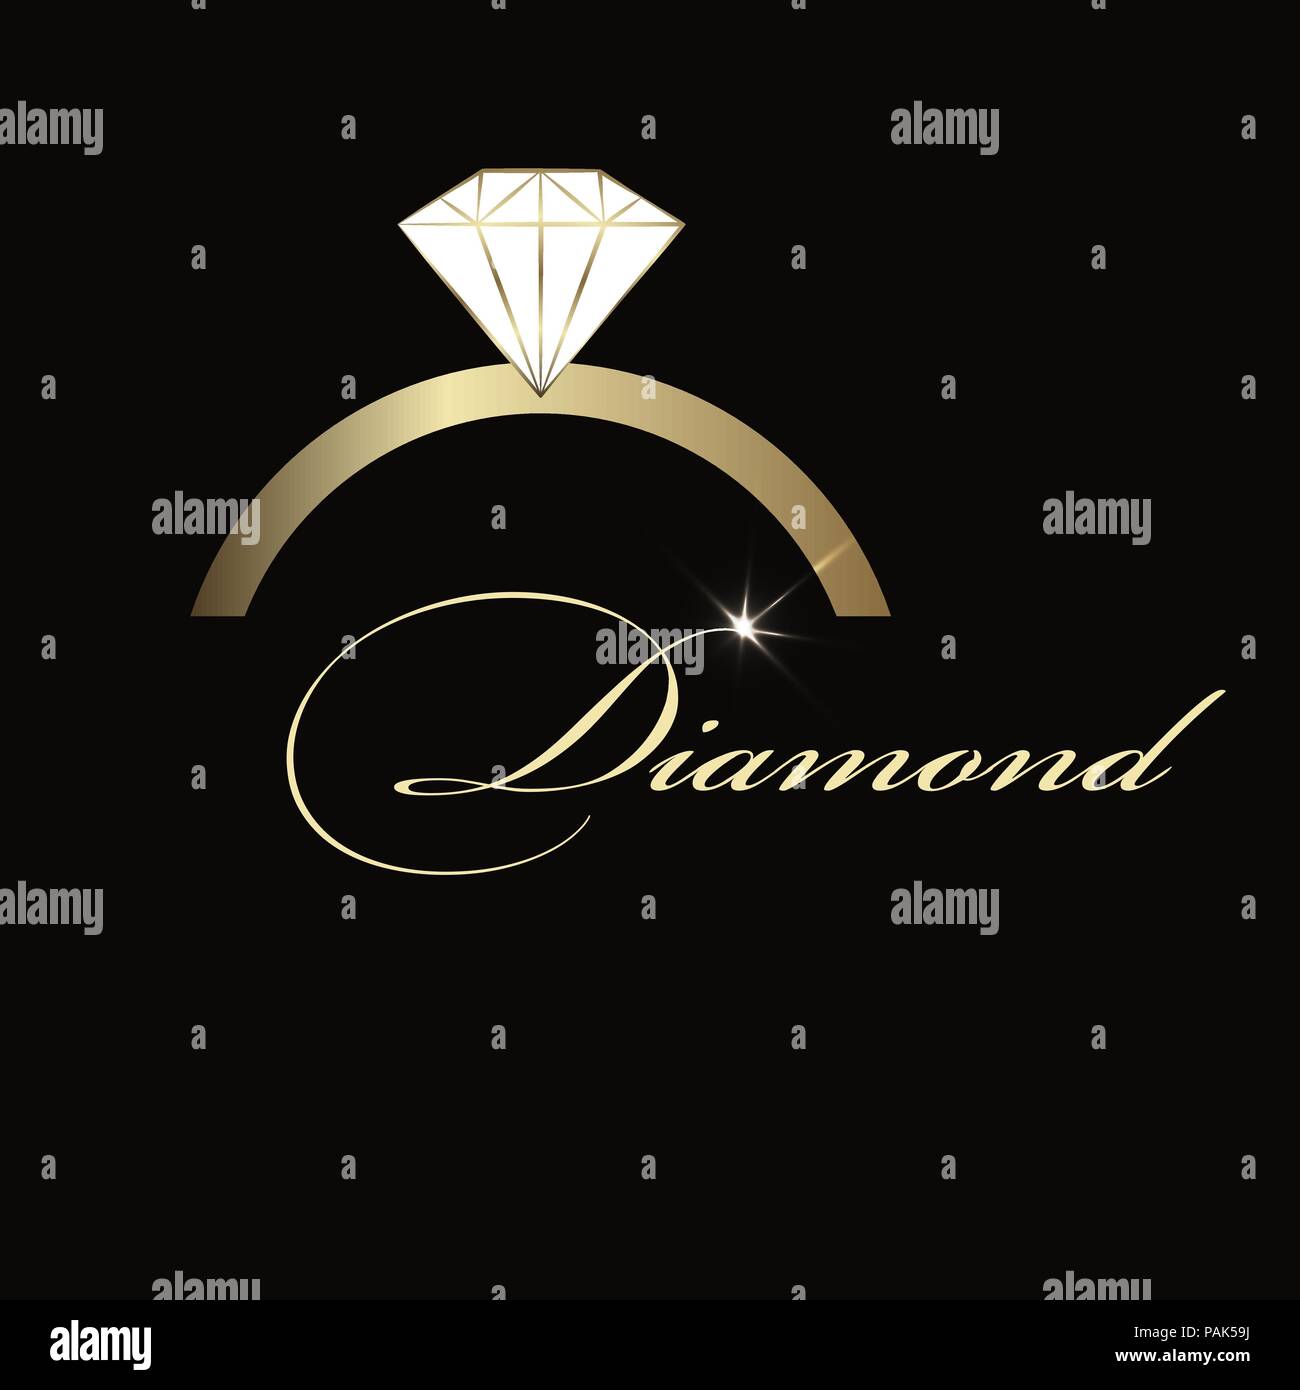 Schmuck Firma Emblem. Ring mit Diamant logo Stock-Vektorgrafik - Alamy